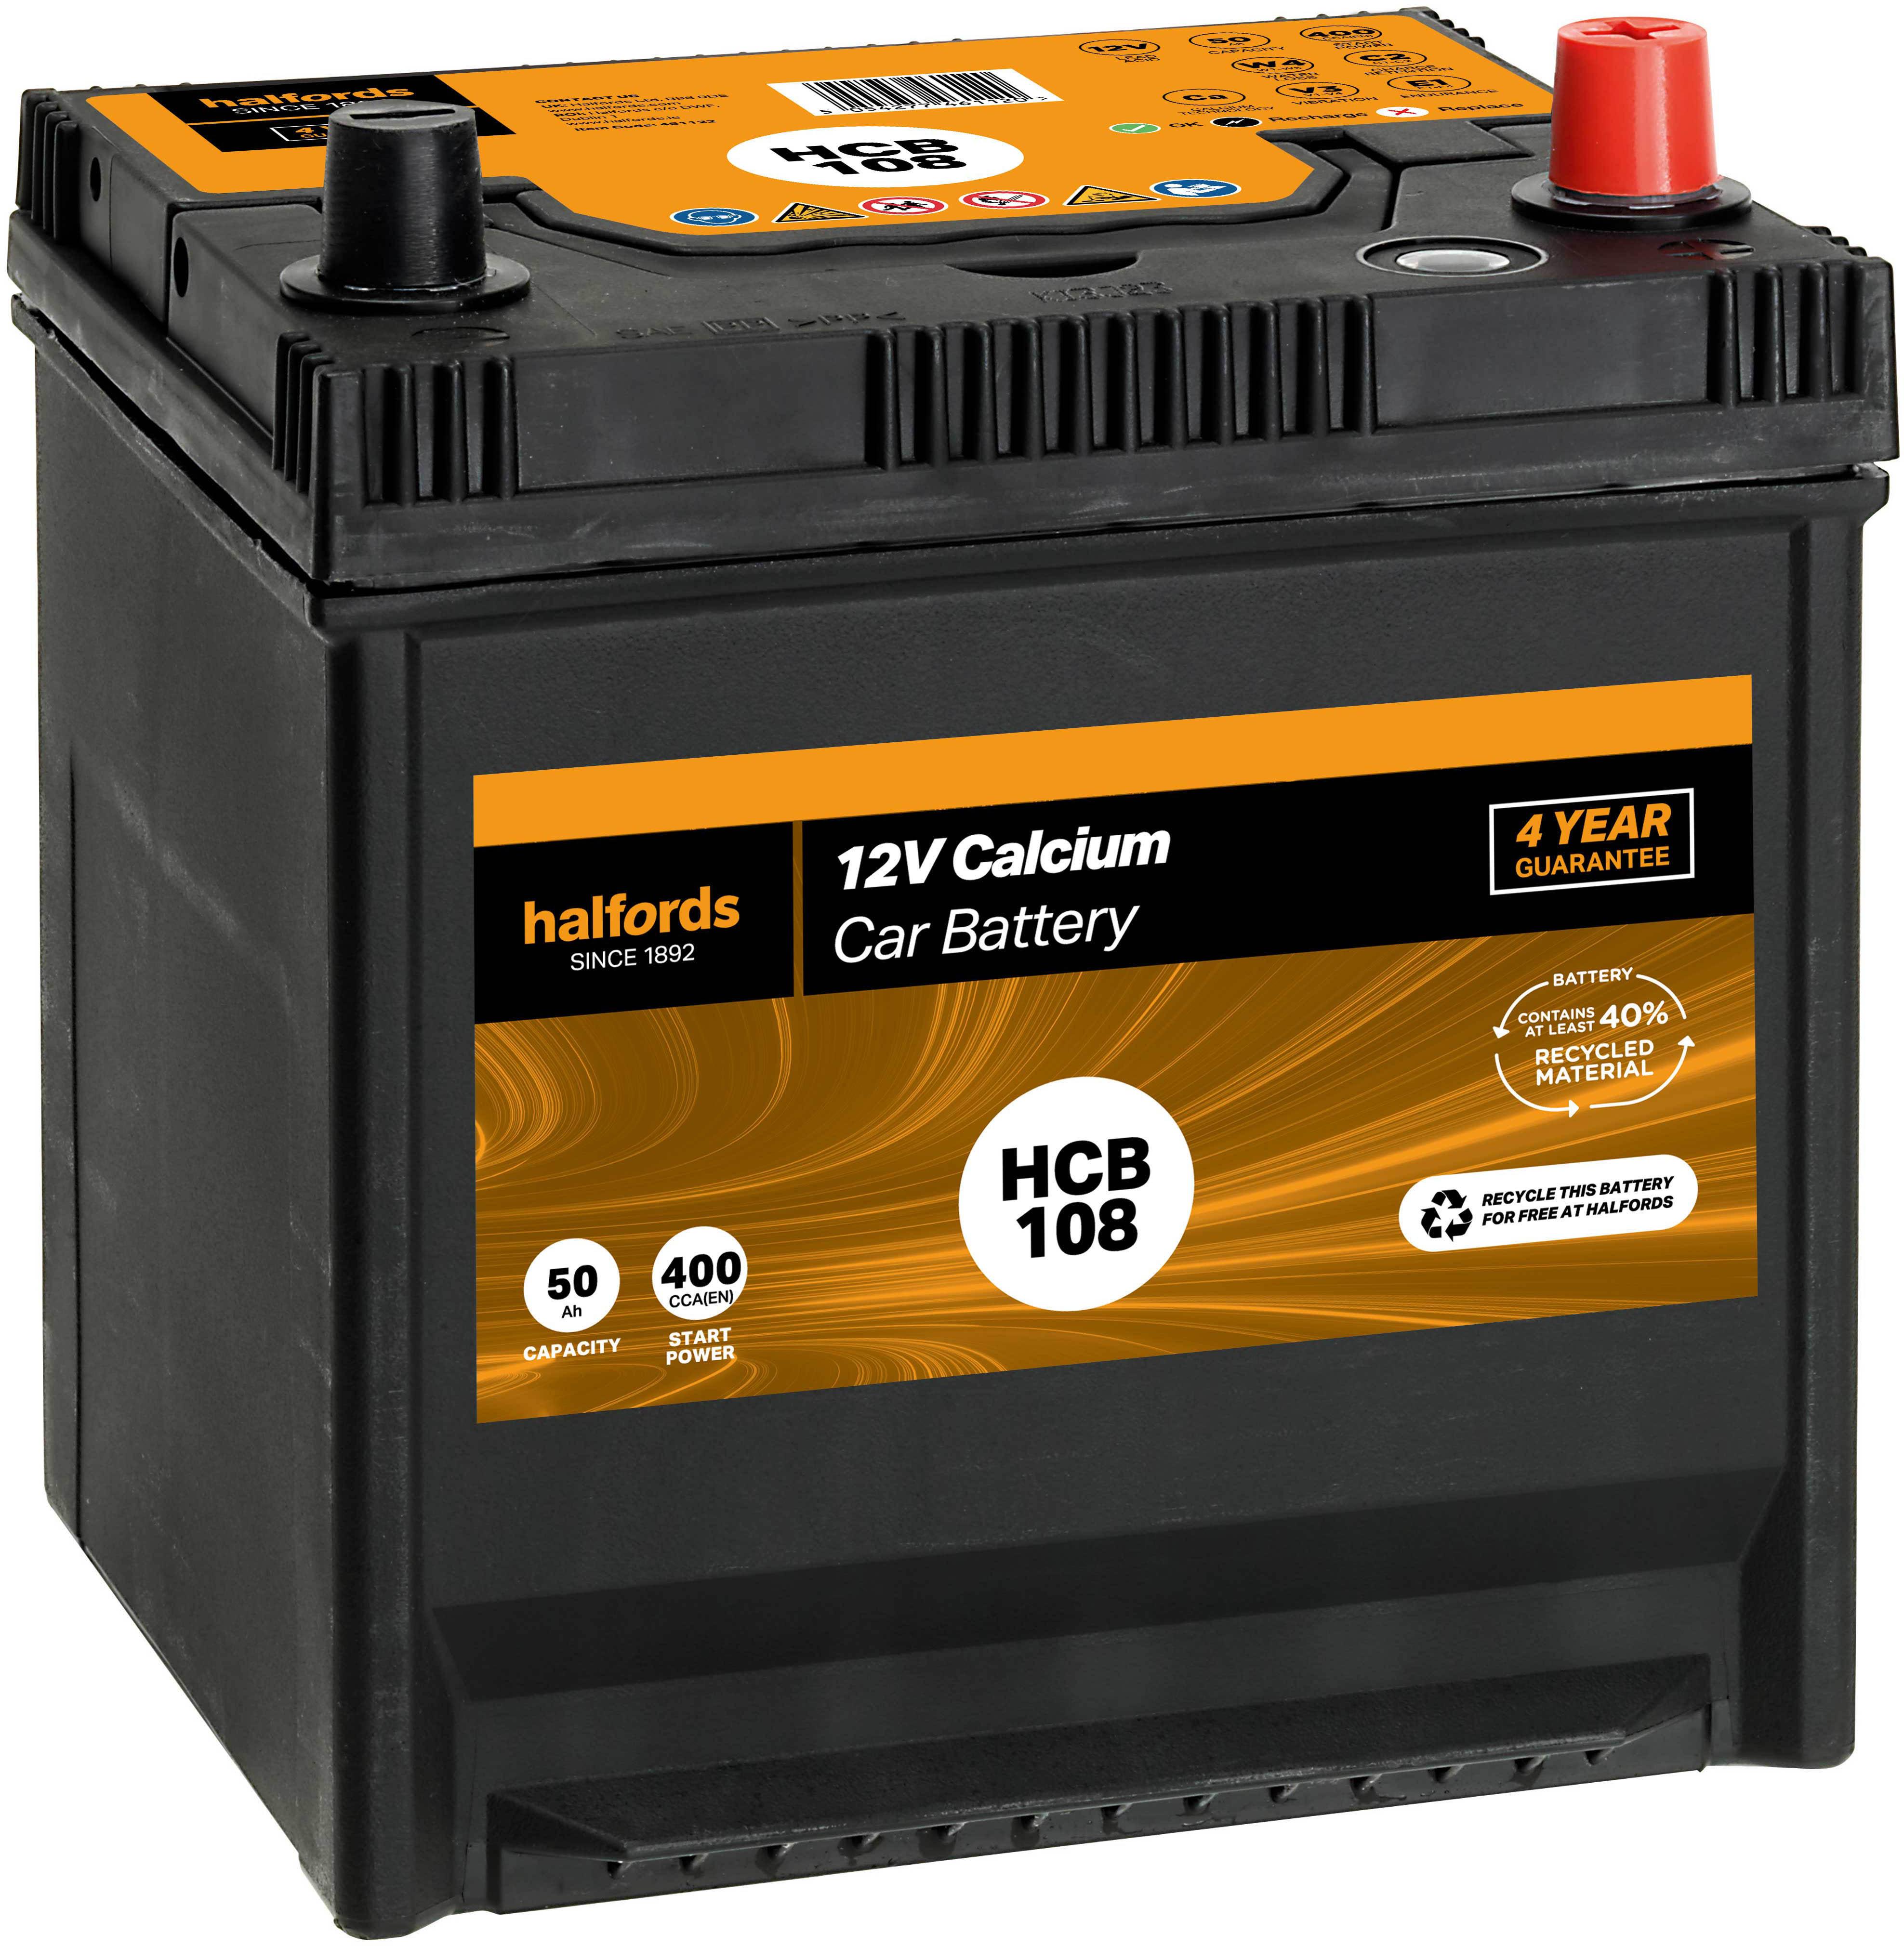 Halfords Hb108 Lead Acid 12V Car Battery 3 Year Guarantee